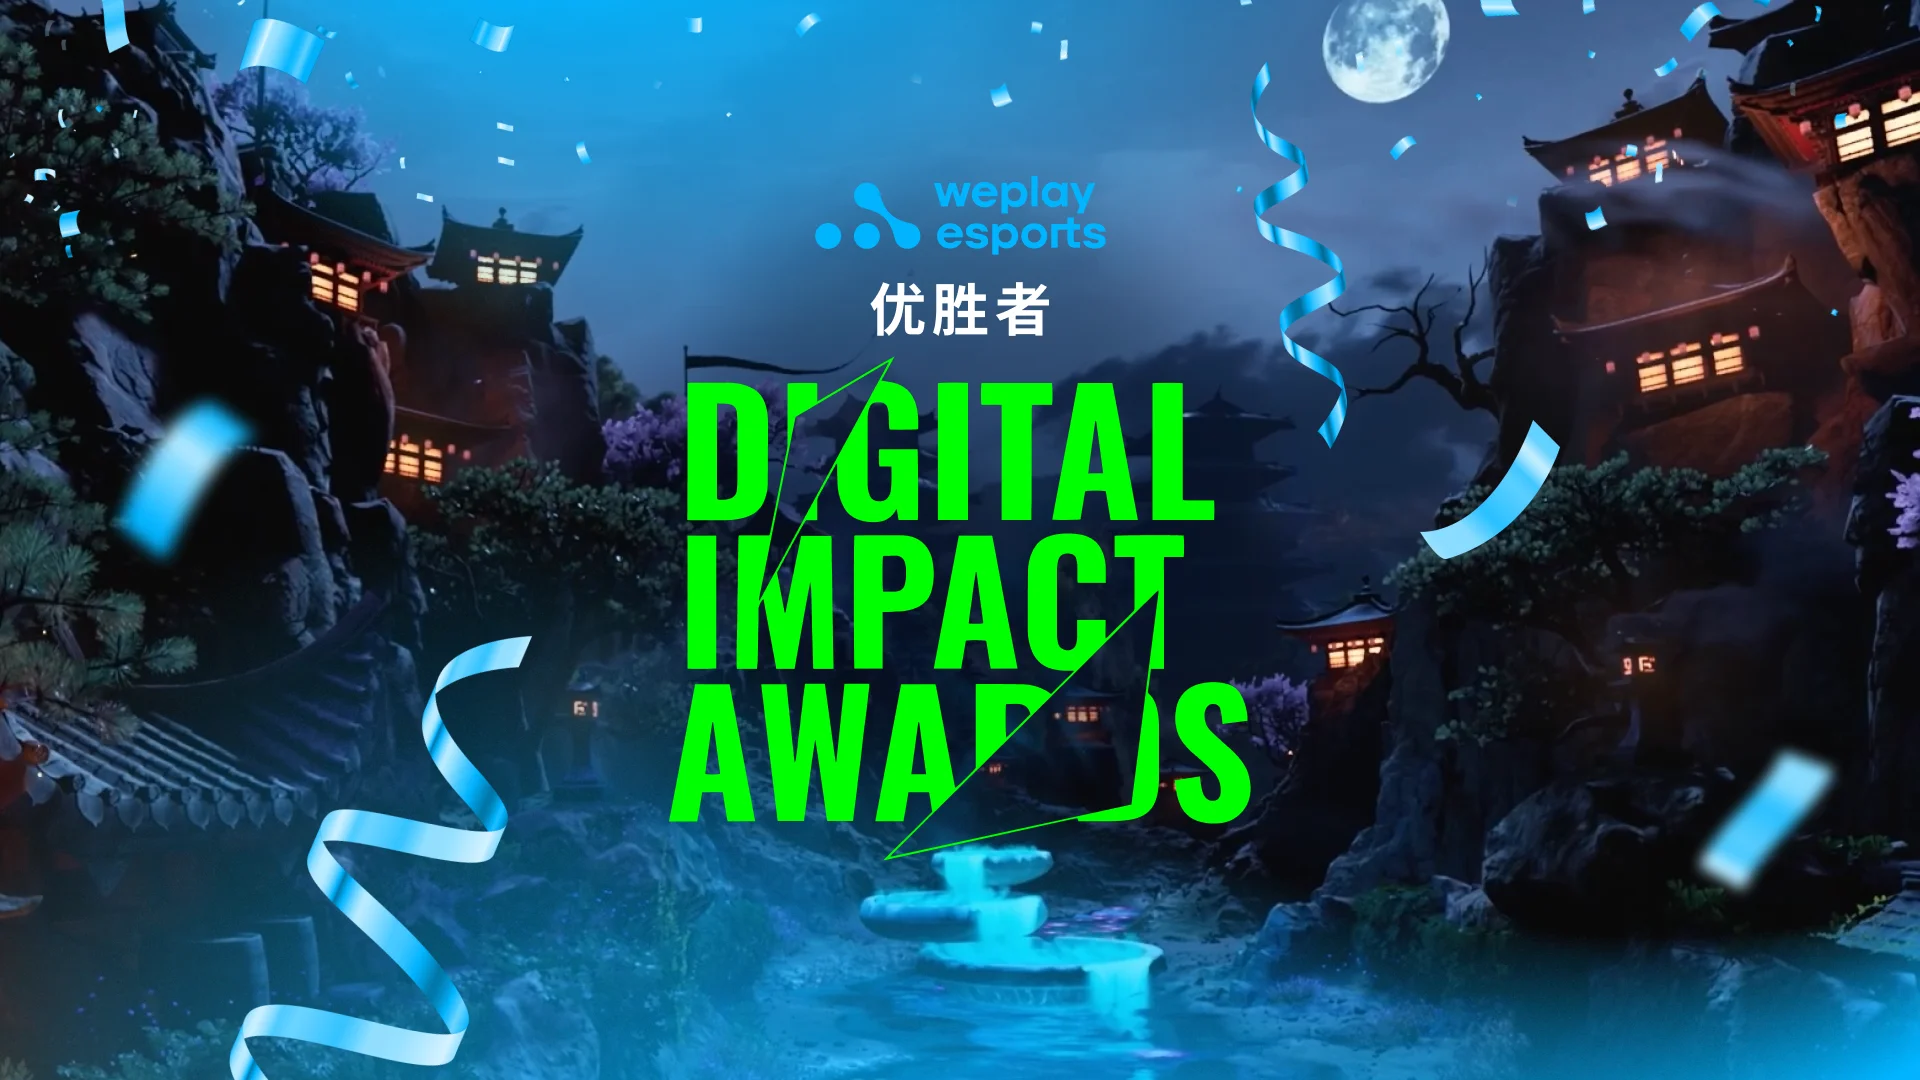 WePlay Esports 在 Digital Impact Awards 中获得铜牌。 图像: WePlay Holding